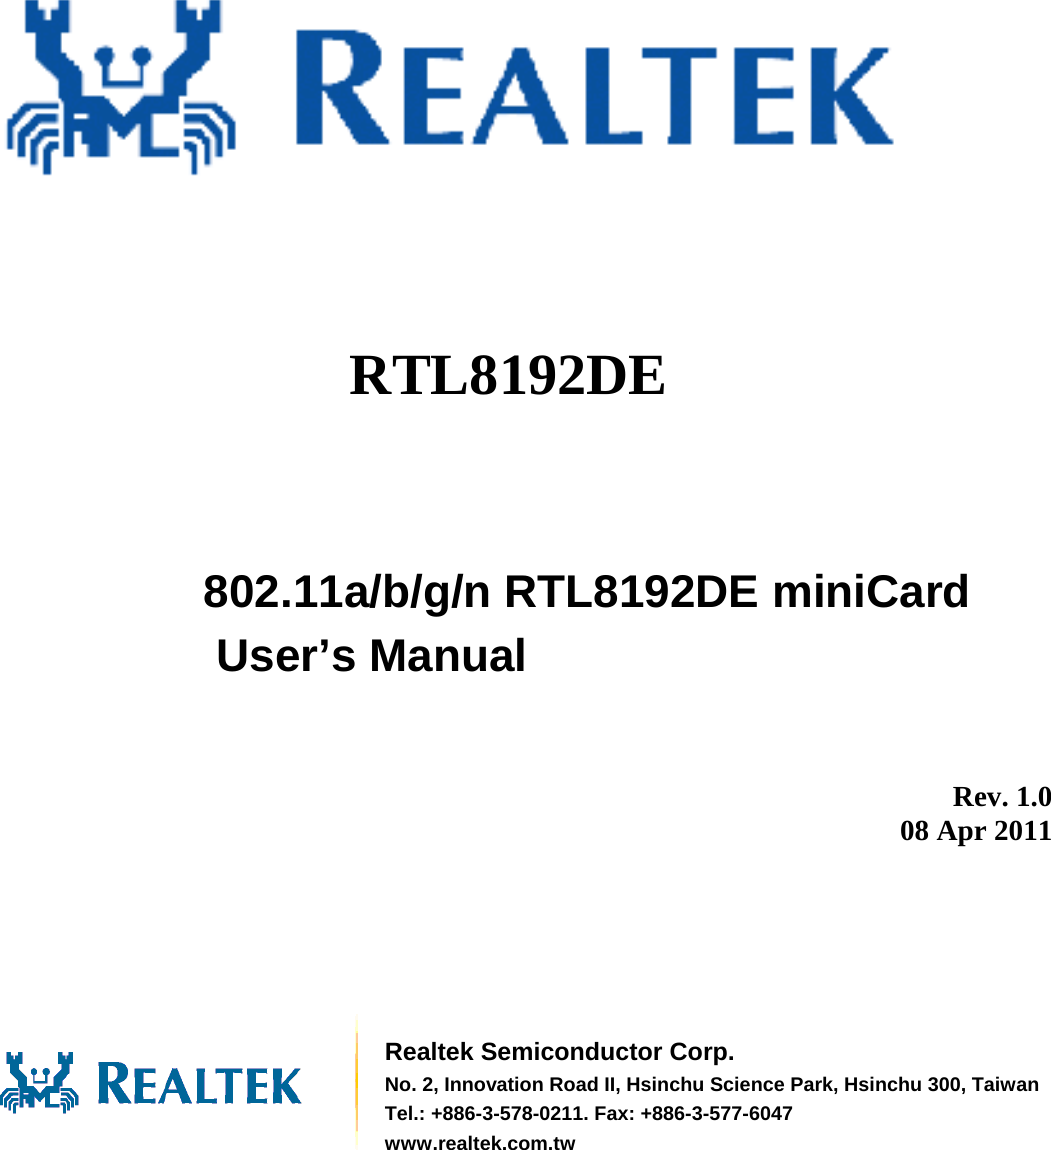               RTL8192DE  802.11a/b/g/n RTL8192DE miniCard User’s Manual          Rev. 1.0 08 Apr 2011        Realtek Semiconductor Corp. No. 2, Innovation Road II, Hsinchu Science Park, Hsinchu 300, TaiwanTel.: +886-3-578-0211. Fax: +886-3-577-6047 www.realtek.com.tw 